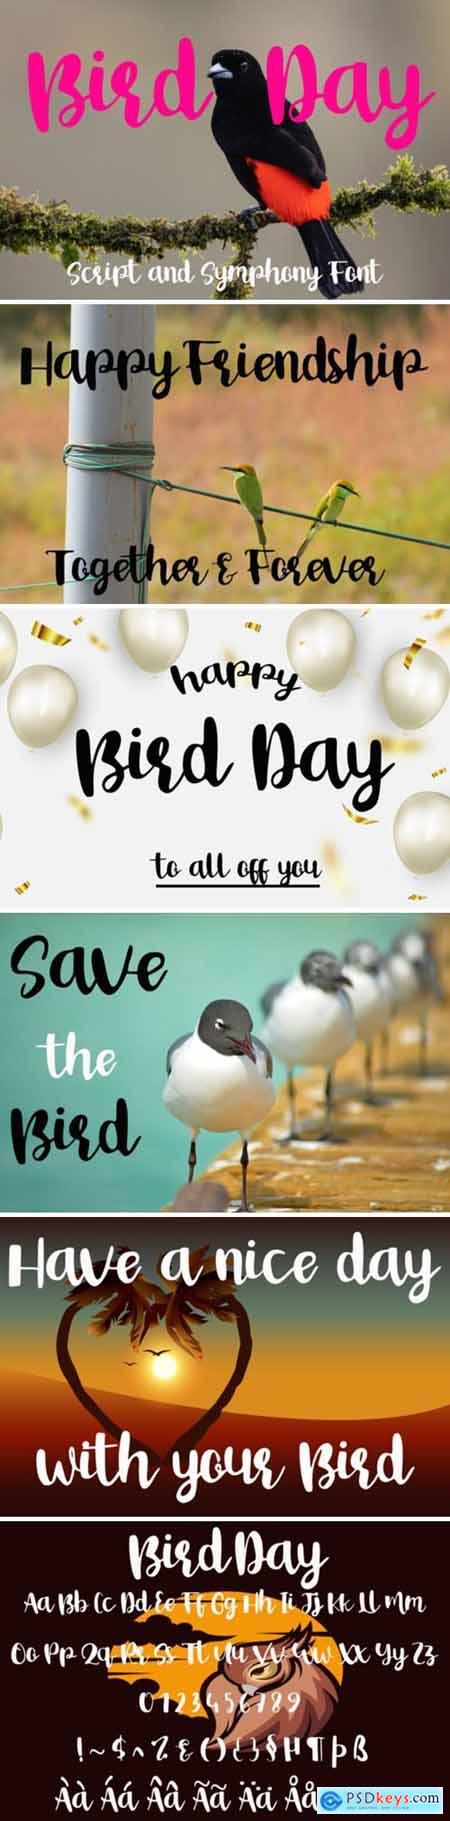 Bird Day Font